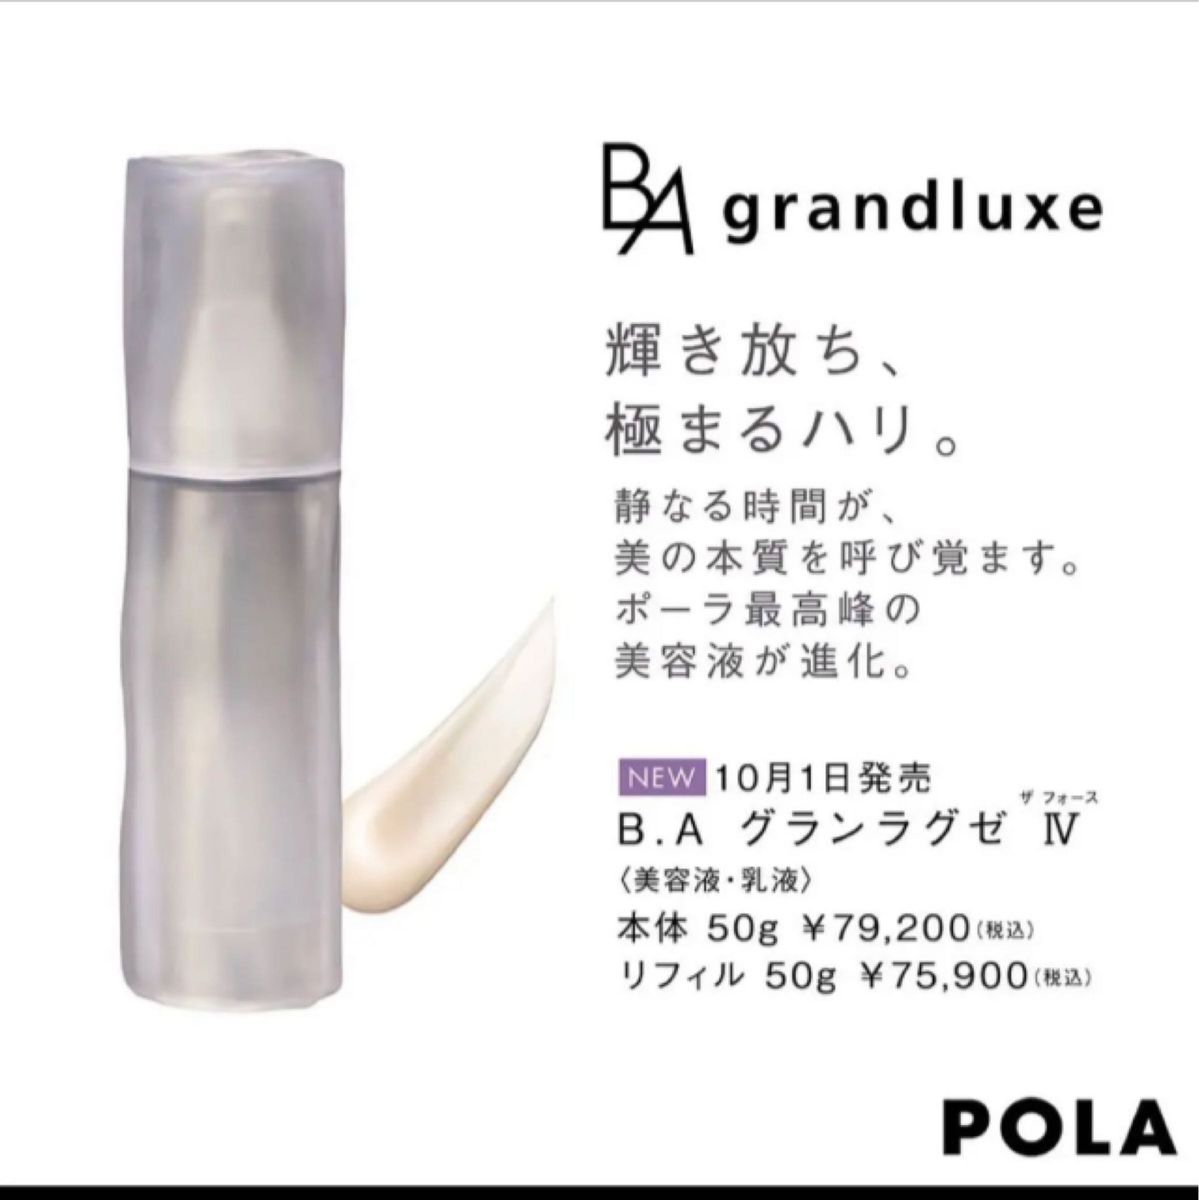 POLA BAグランラグゼIV 本体50g - 基礎化粧品